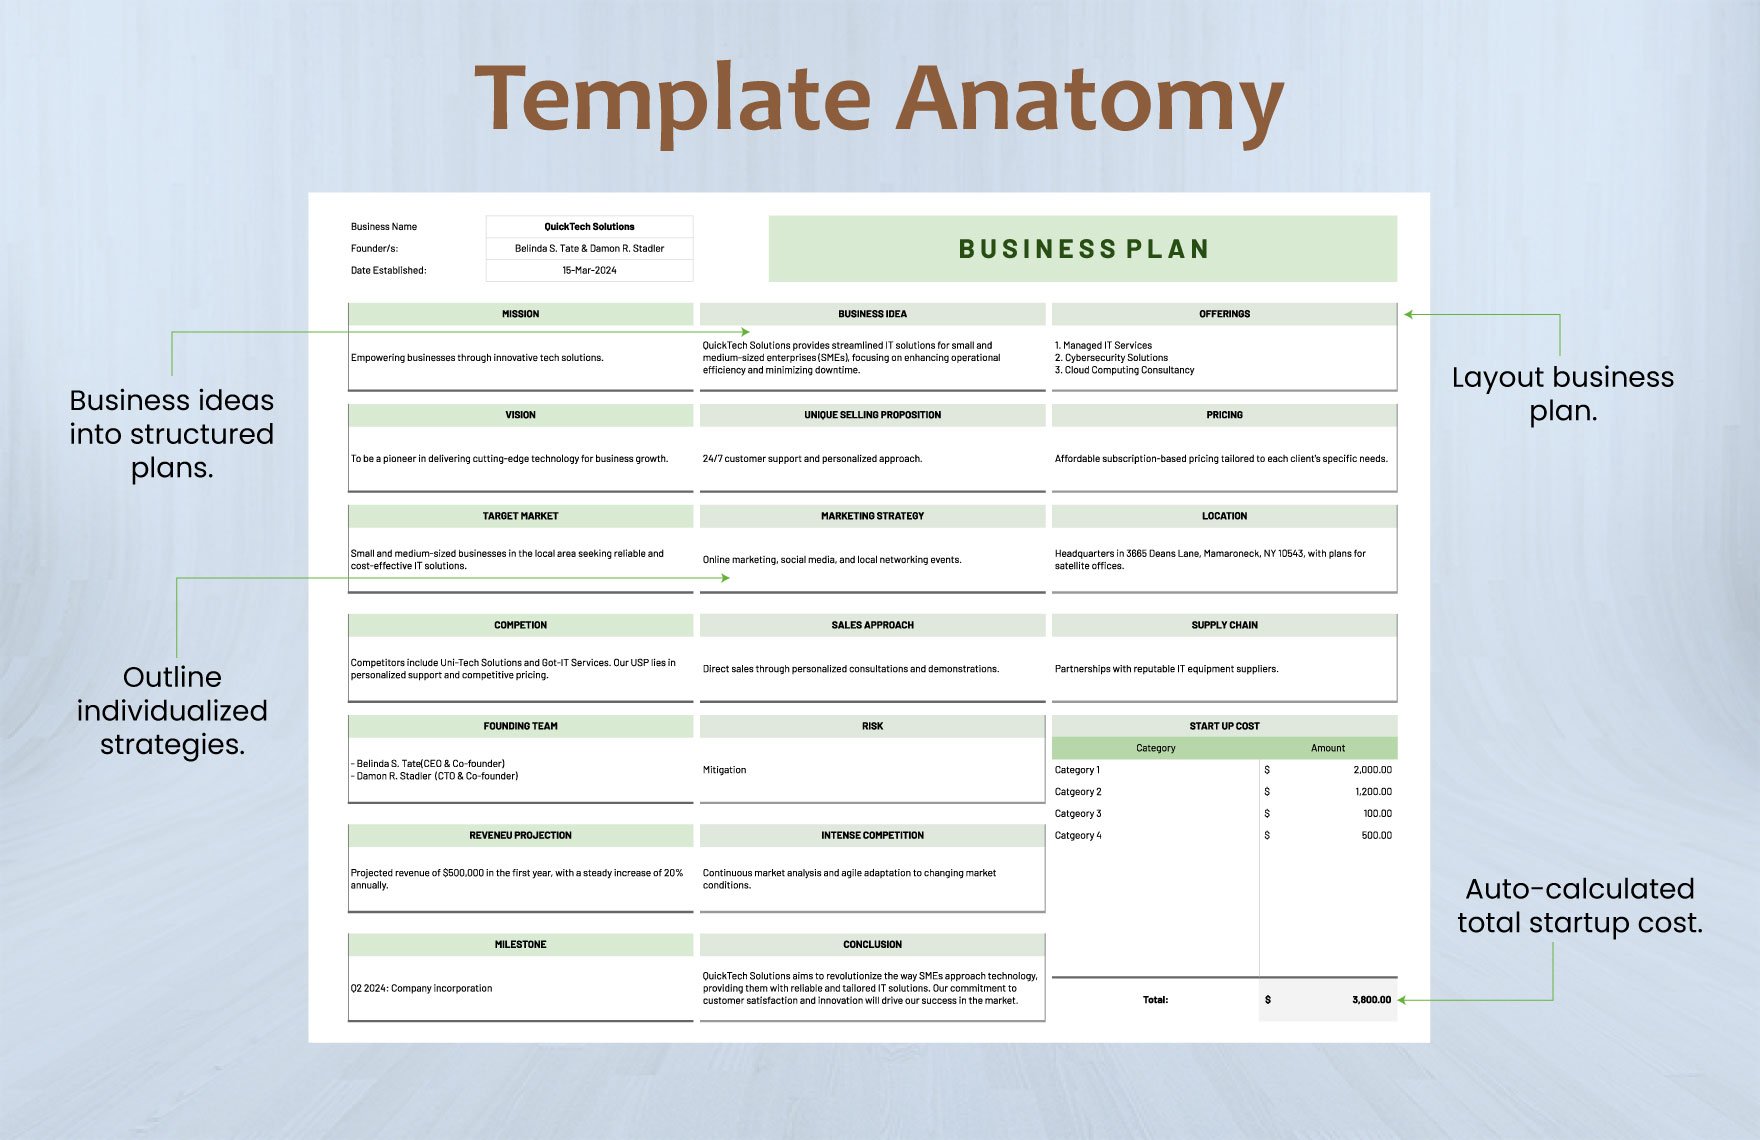 Blank Business Plan Template